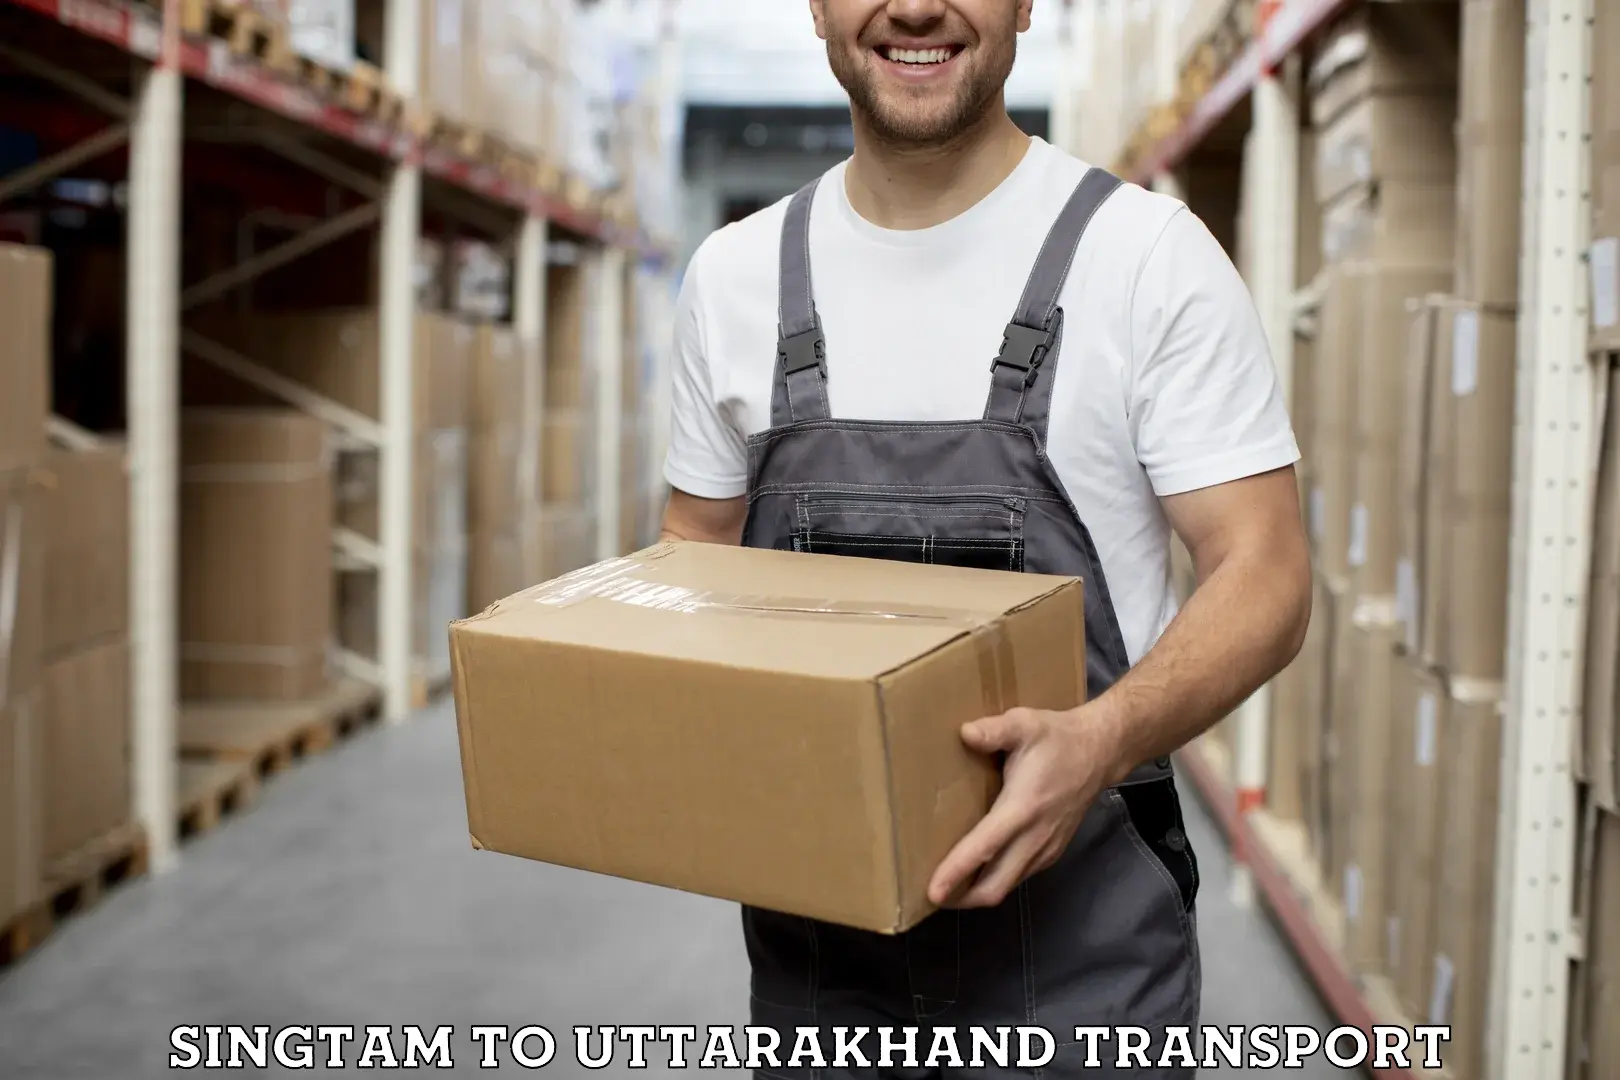 Delivery service Singtam to Uttarakhand